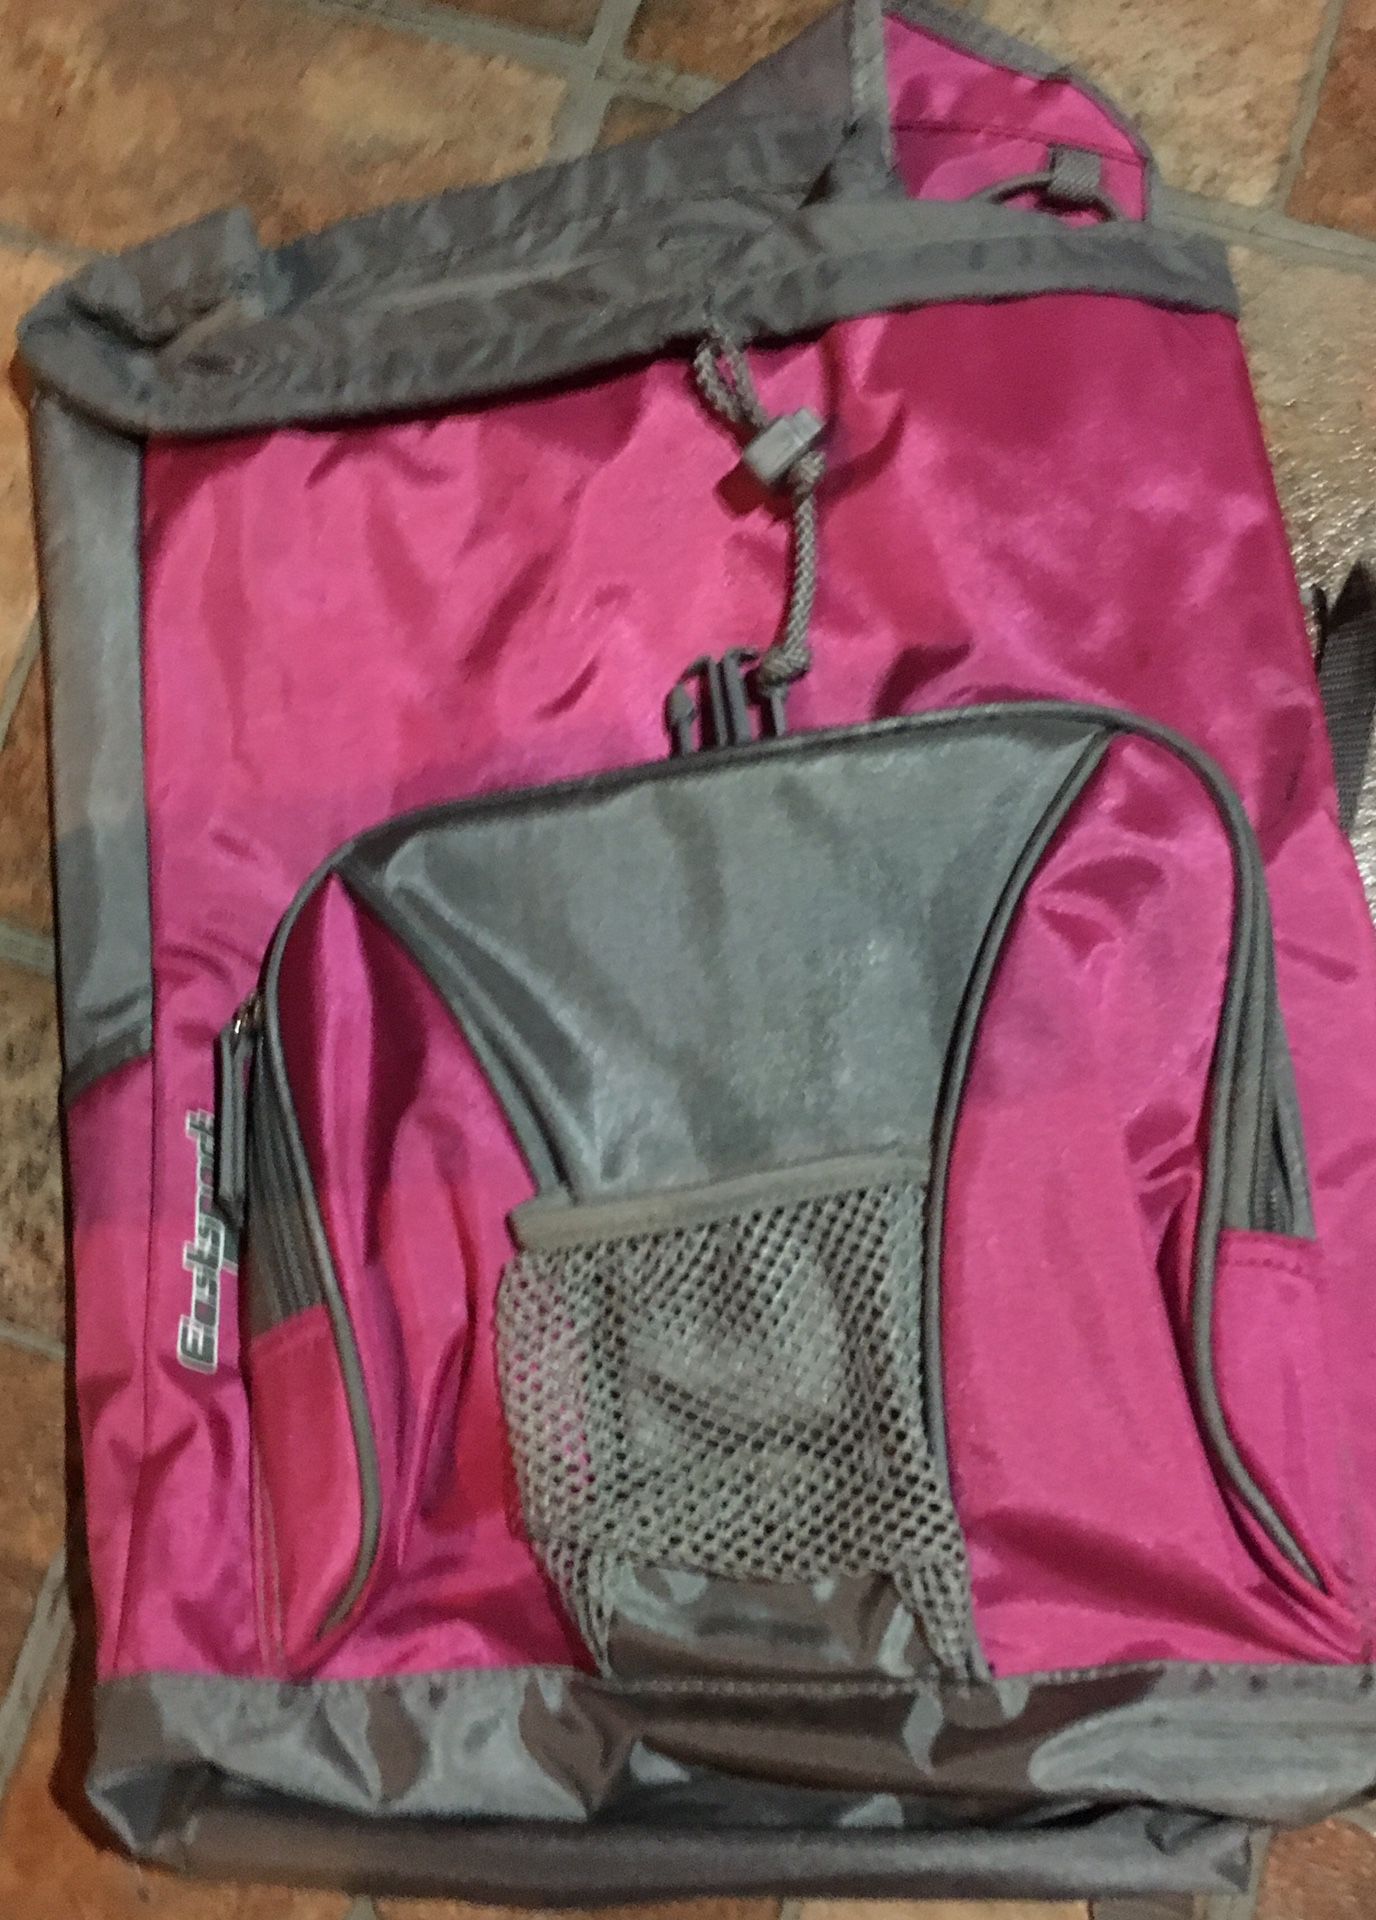 Eastsport Pink/Silver Gray Bookbag/Backpack